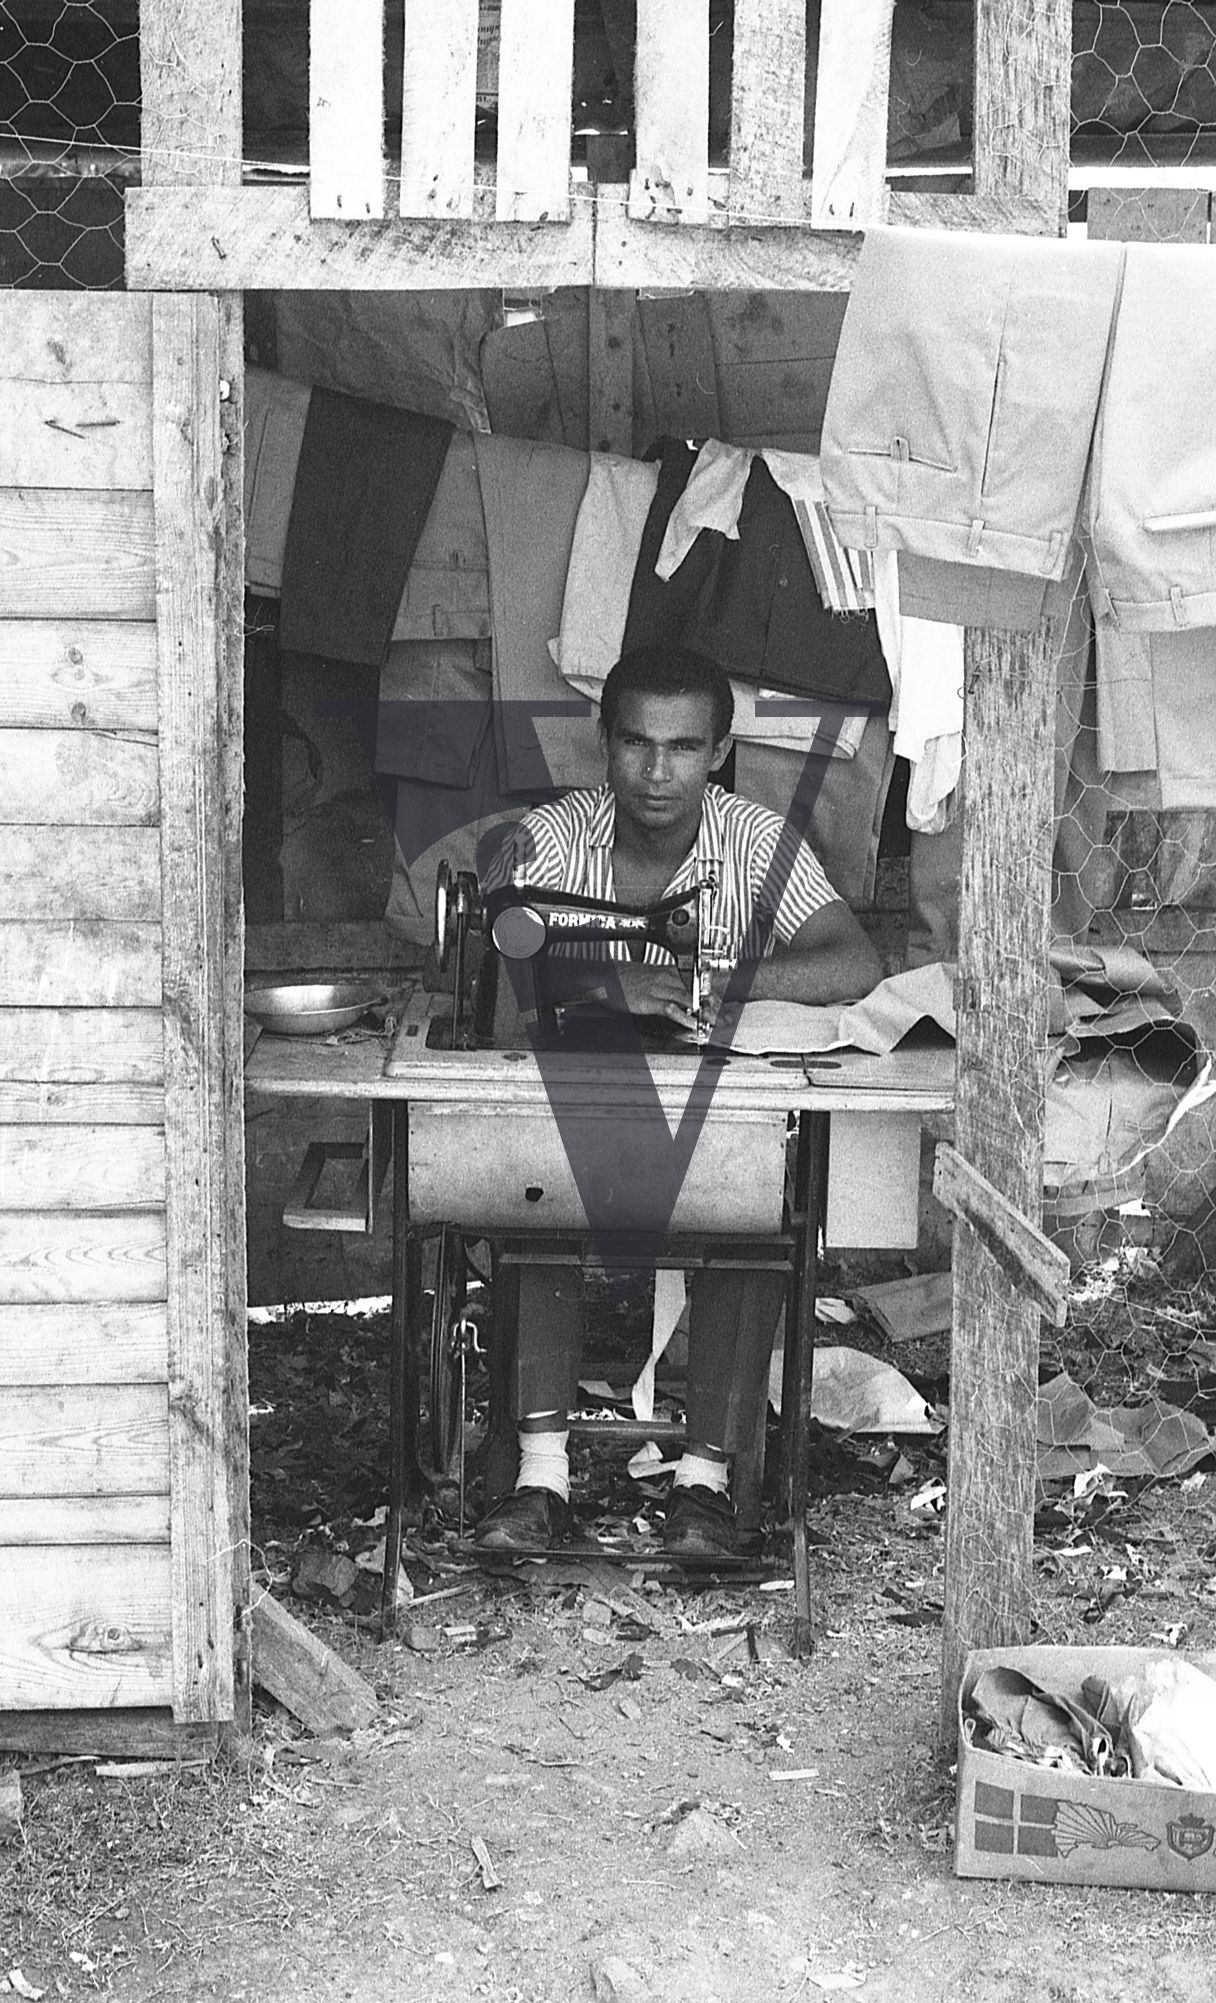 Dominican Republic, tailor, portrait, Formica sewing machine.